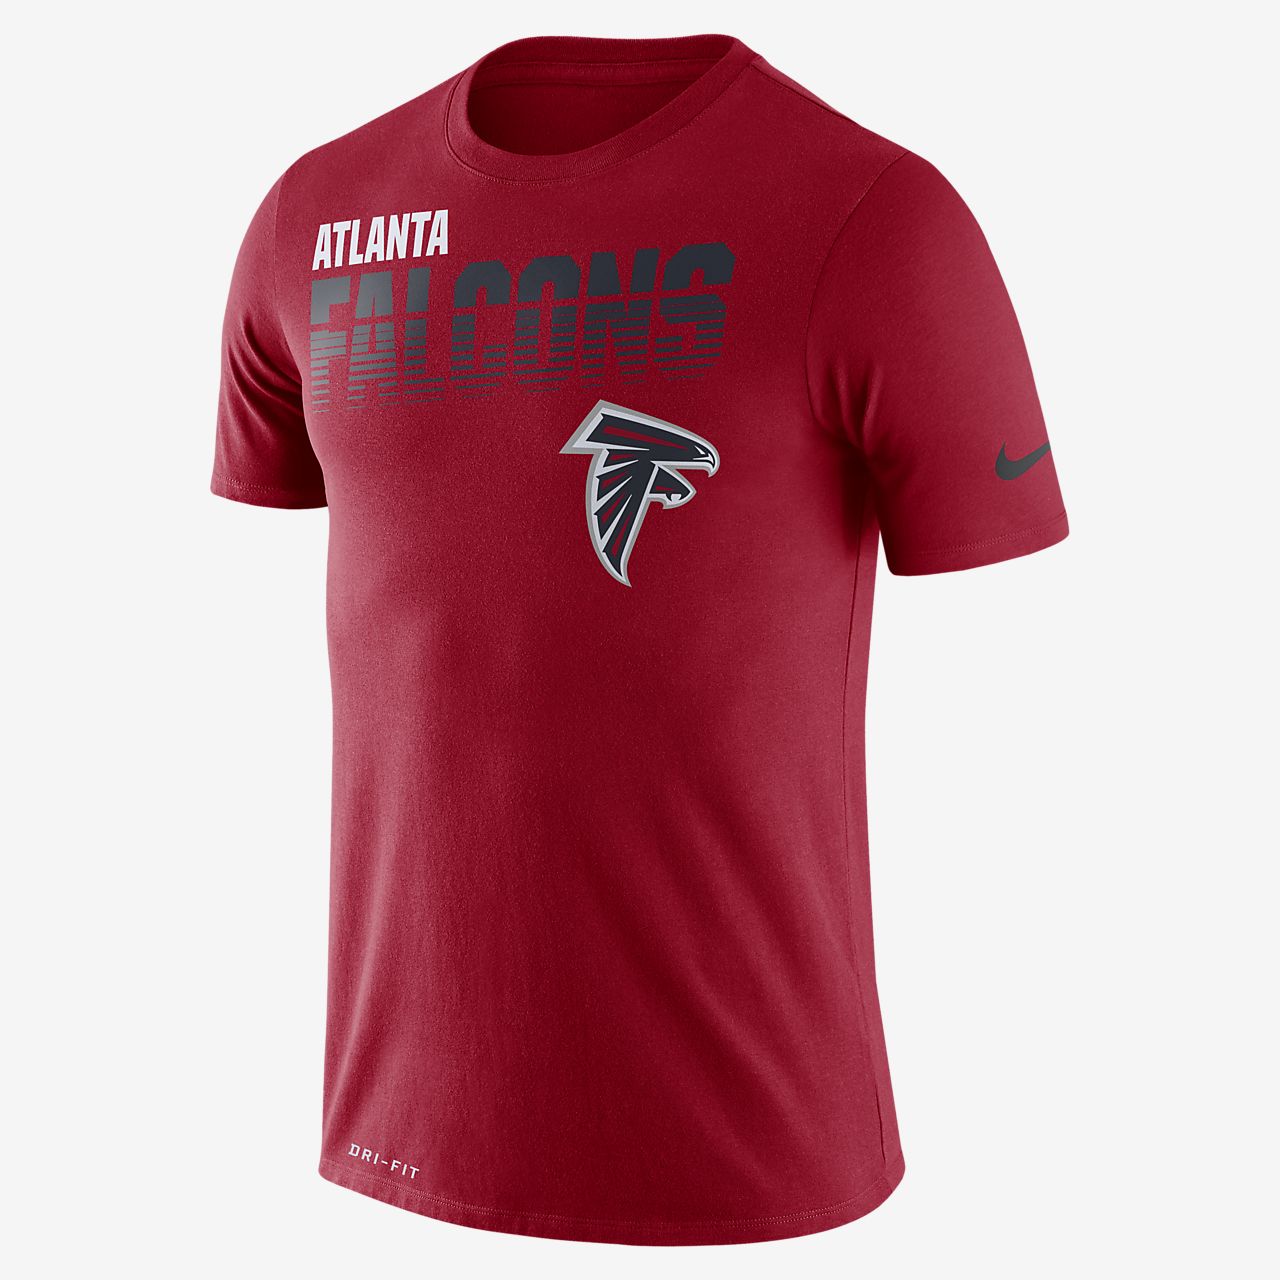 NFL Falcons) Men's Short-Sleeve T-Shirt 